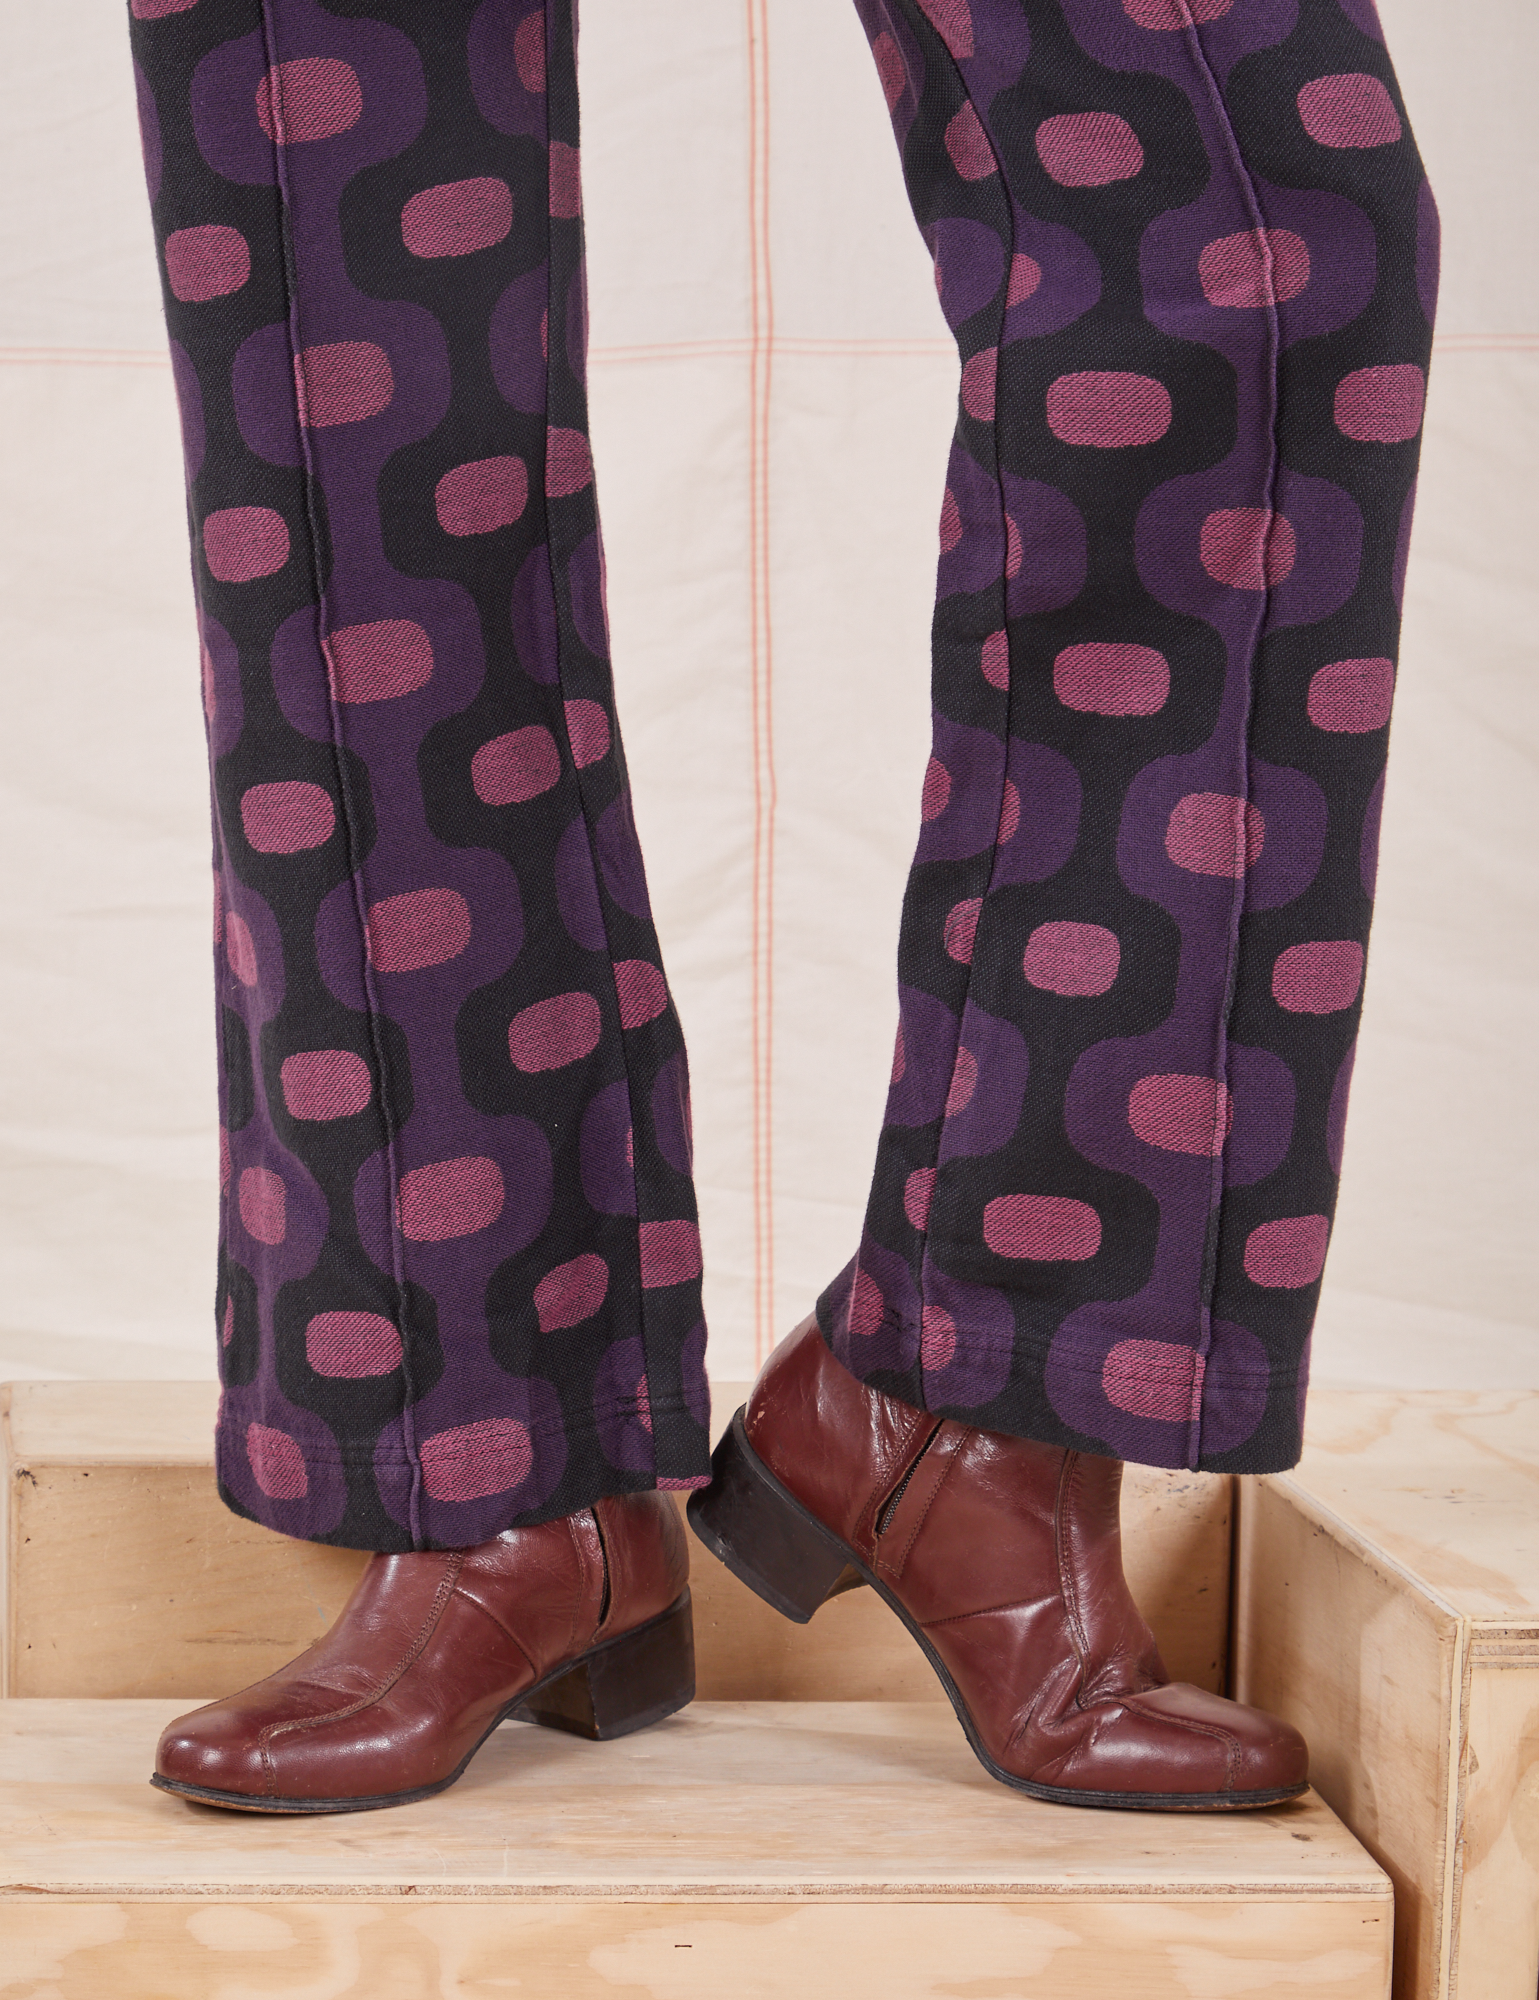 Western Pants in Purple Tile Jacquard pant leg close up on Jesse